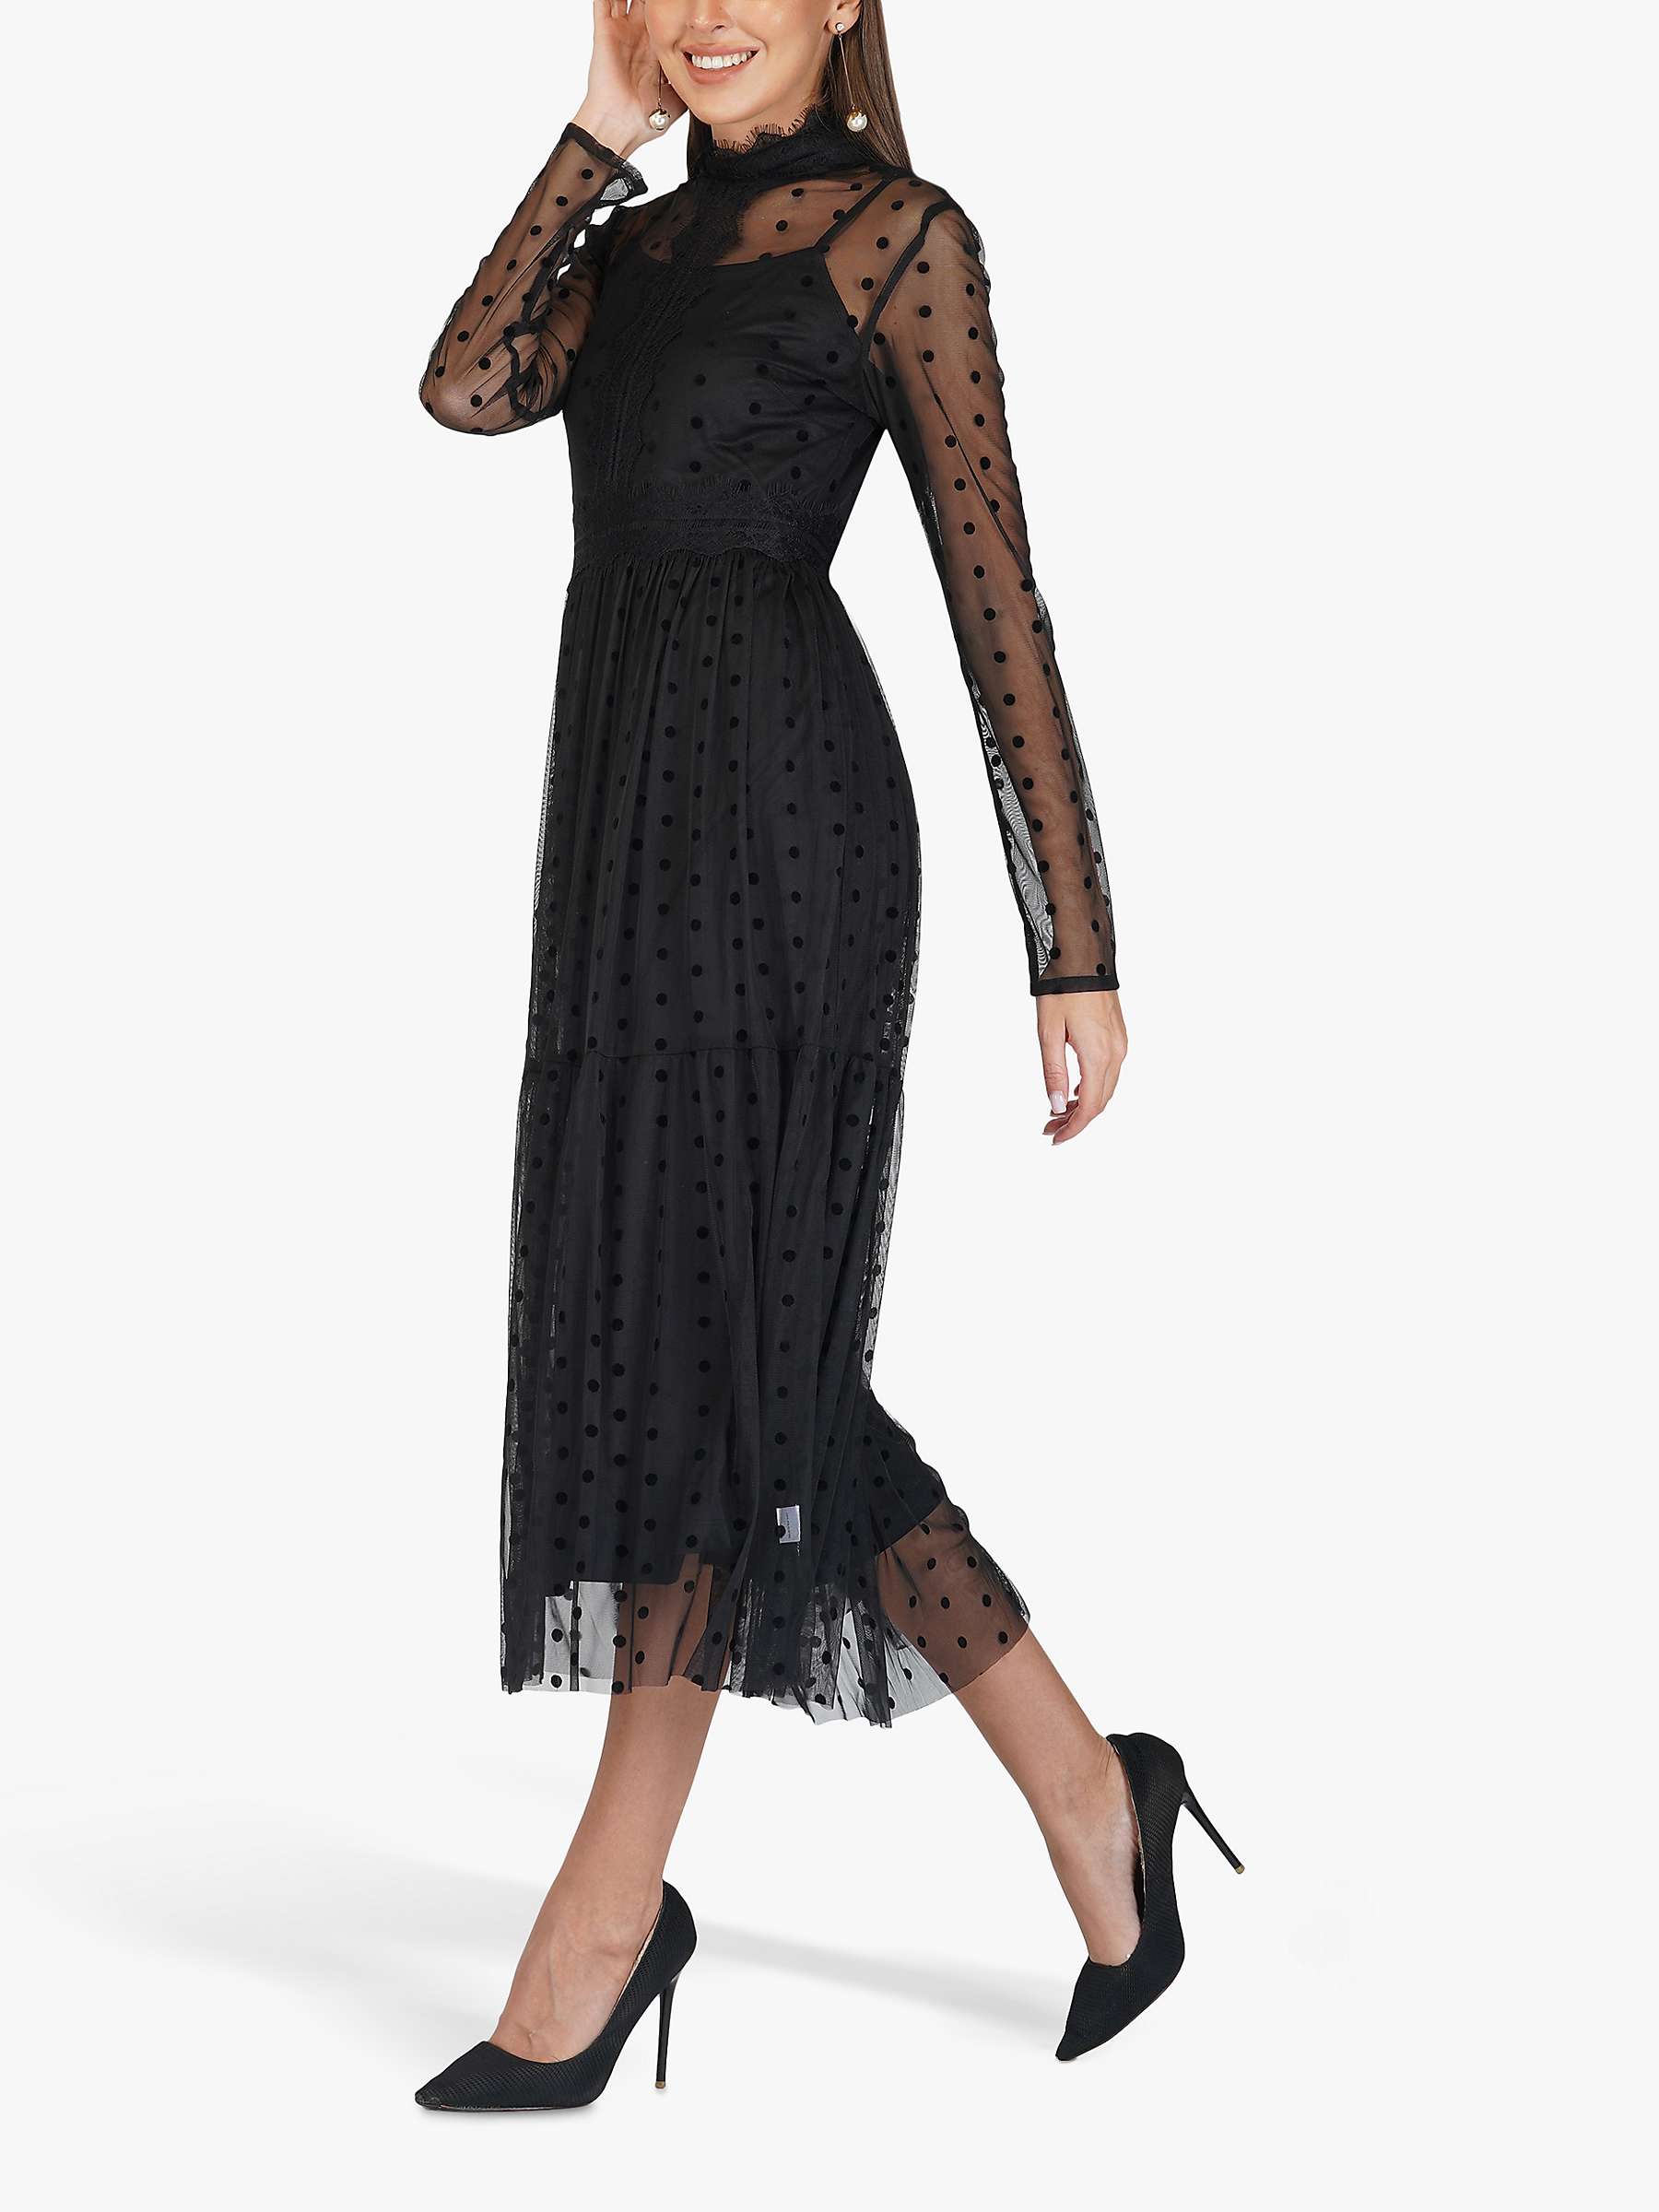 Buy Lace & Beads Roman Lola Spot Mesh Midi Dress Online at johnlewis.com